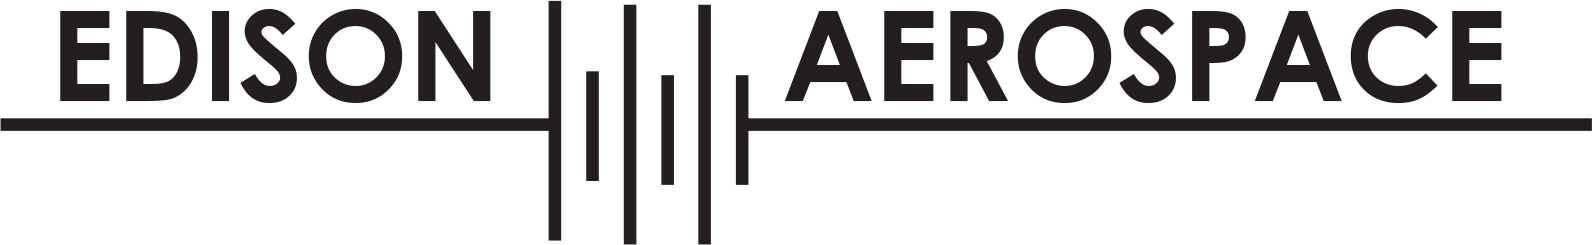 Edison Aerospace logo